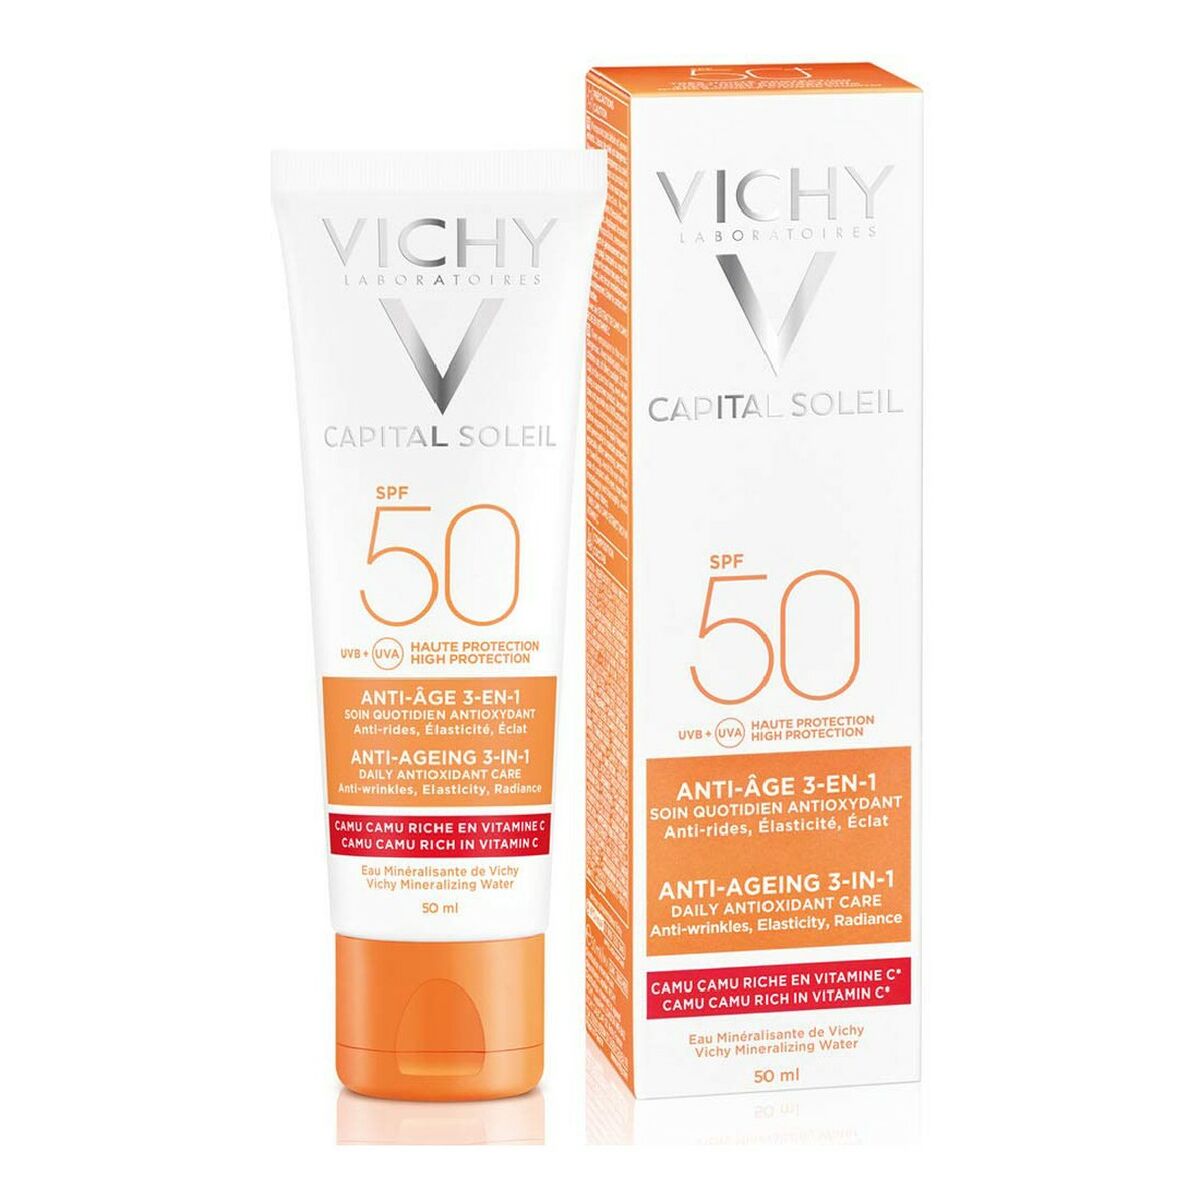 Sonnencreme fürs Gesicht Capital Soleil Vichy VCH00115 Spf 50 50 ml 3-in-1 Anti-Aging